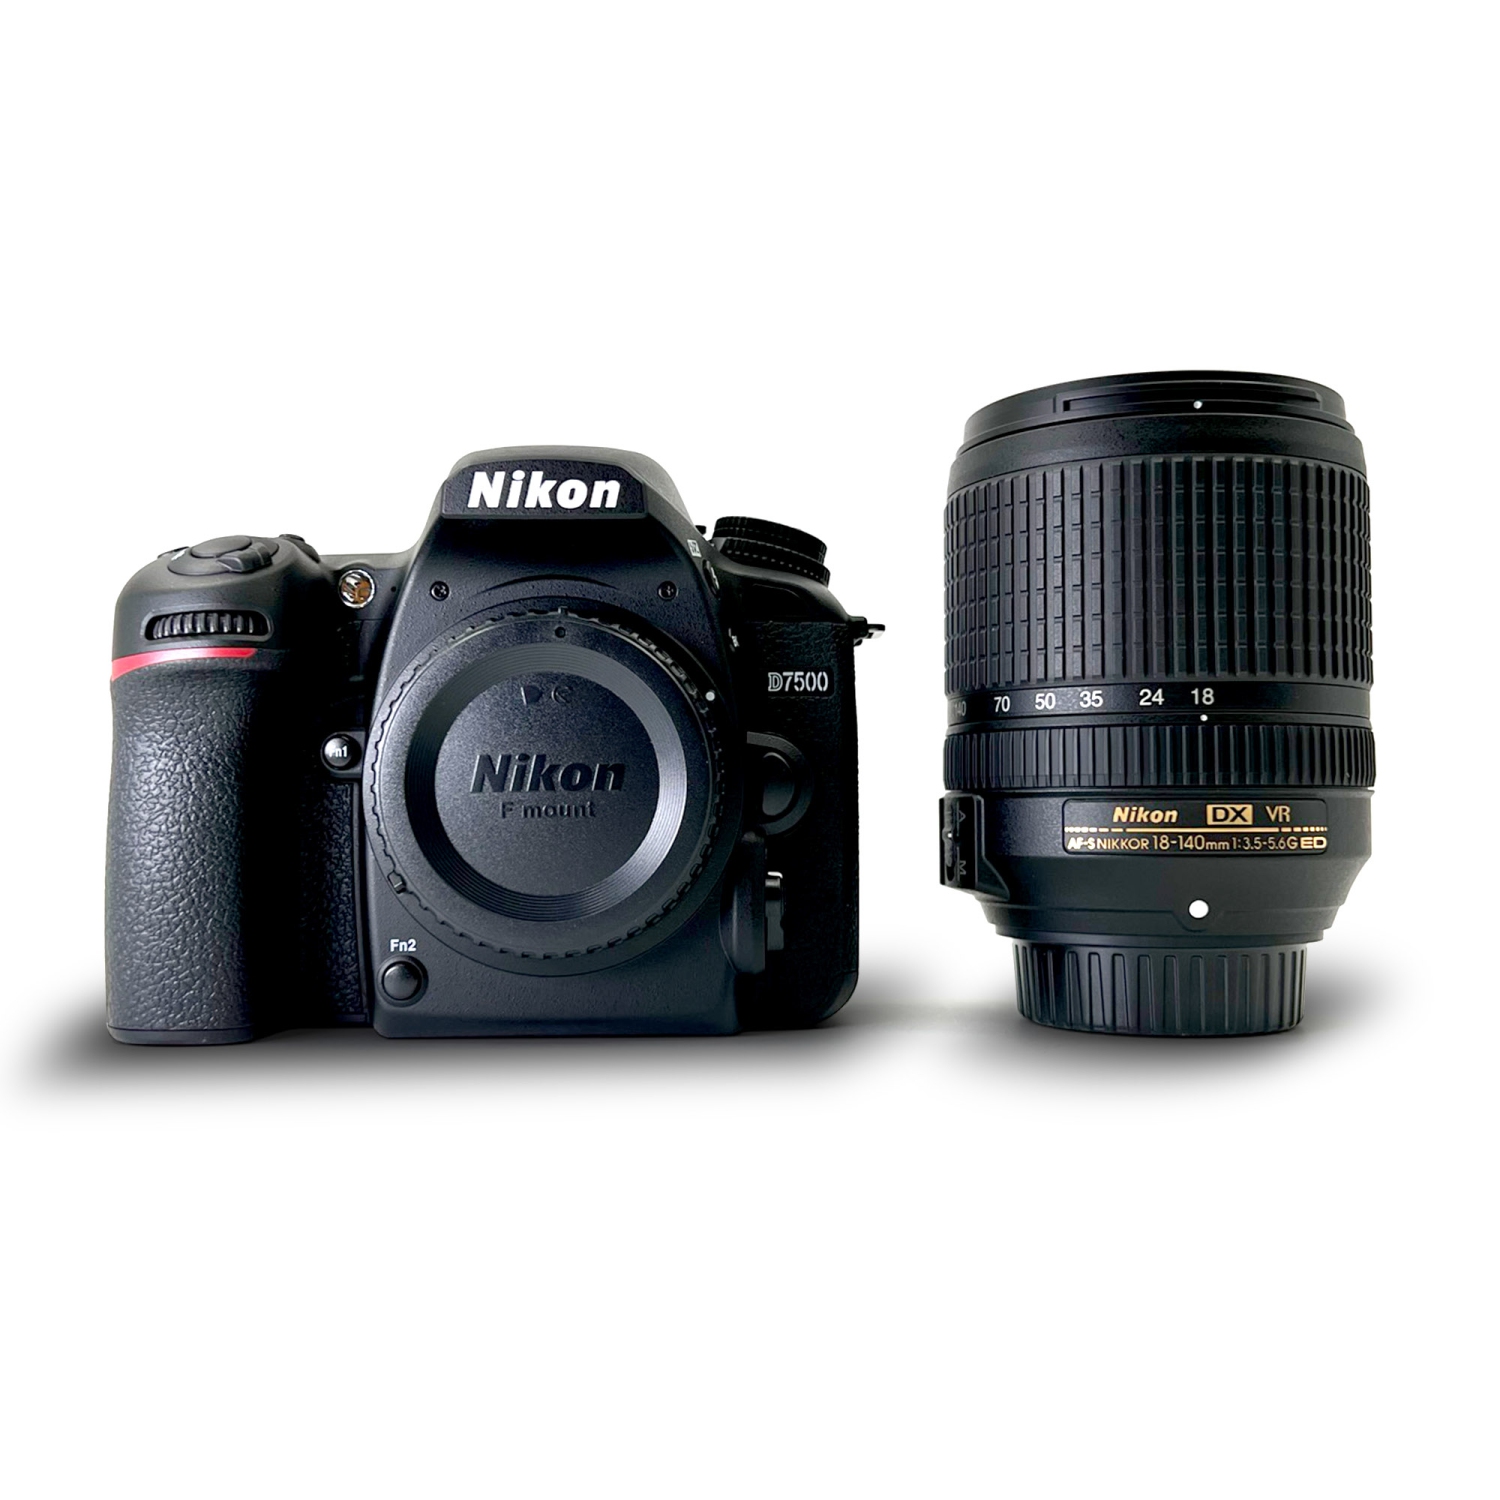 Nikon D7500 Digital SLR Camera with 18-140mm Lens (International Model)